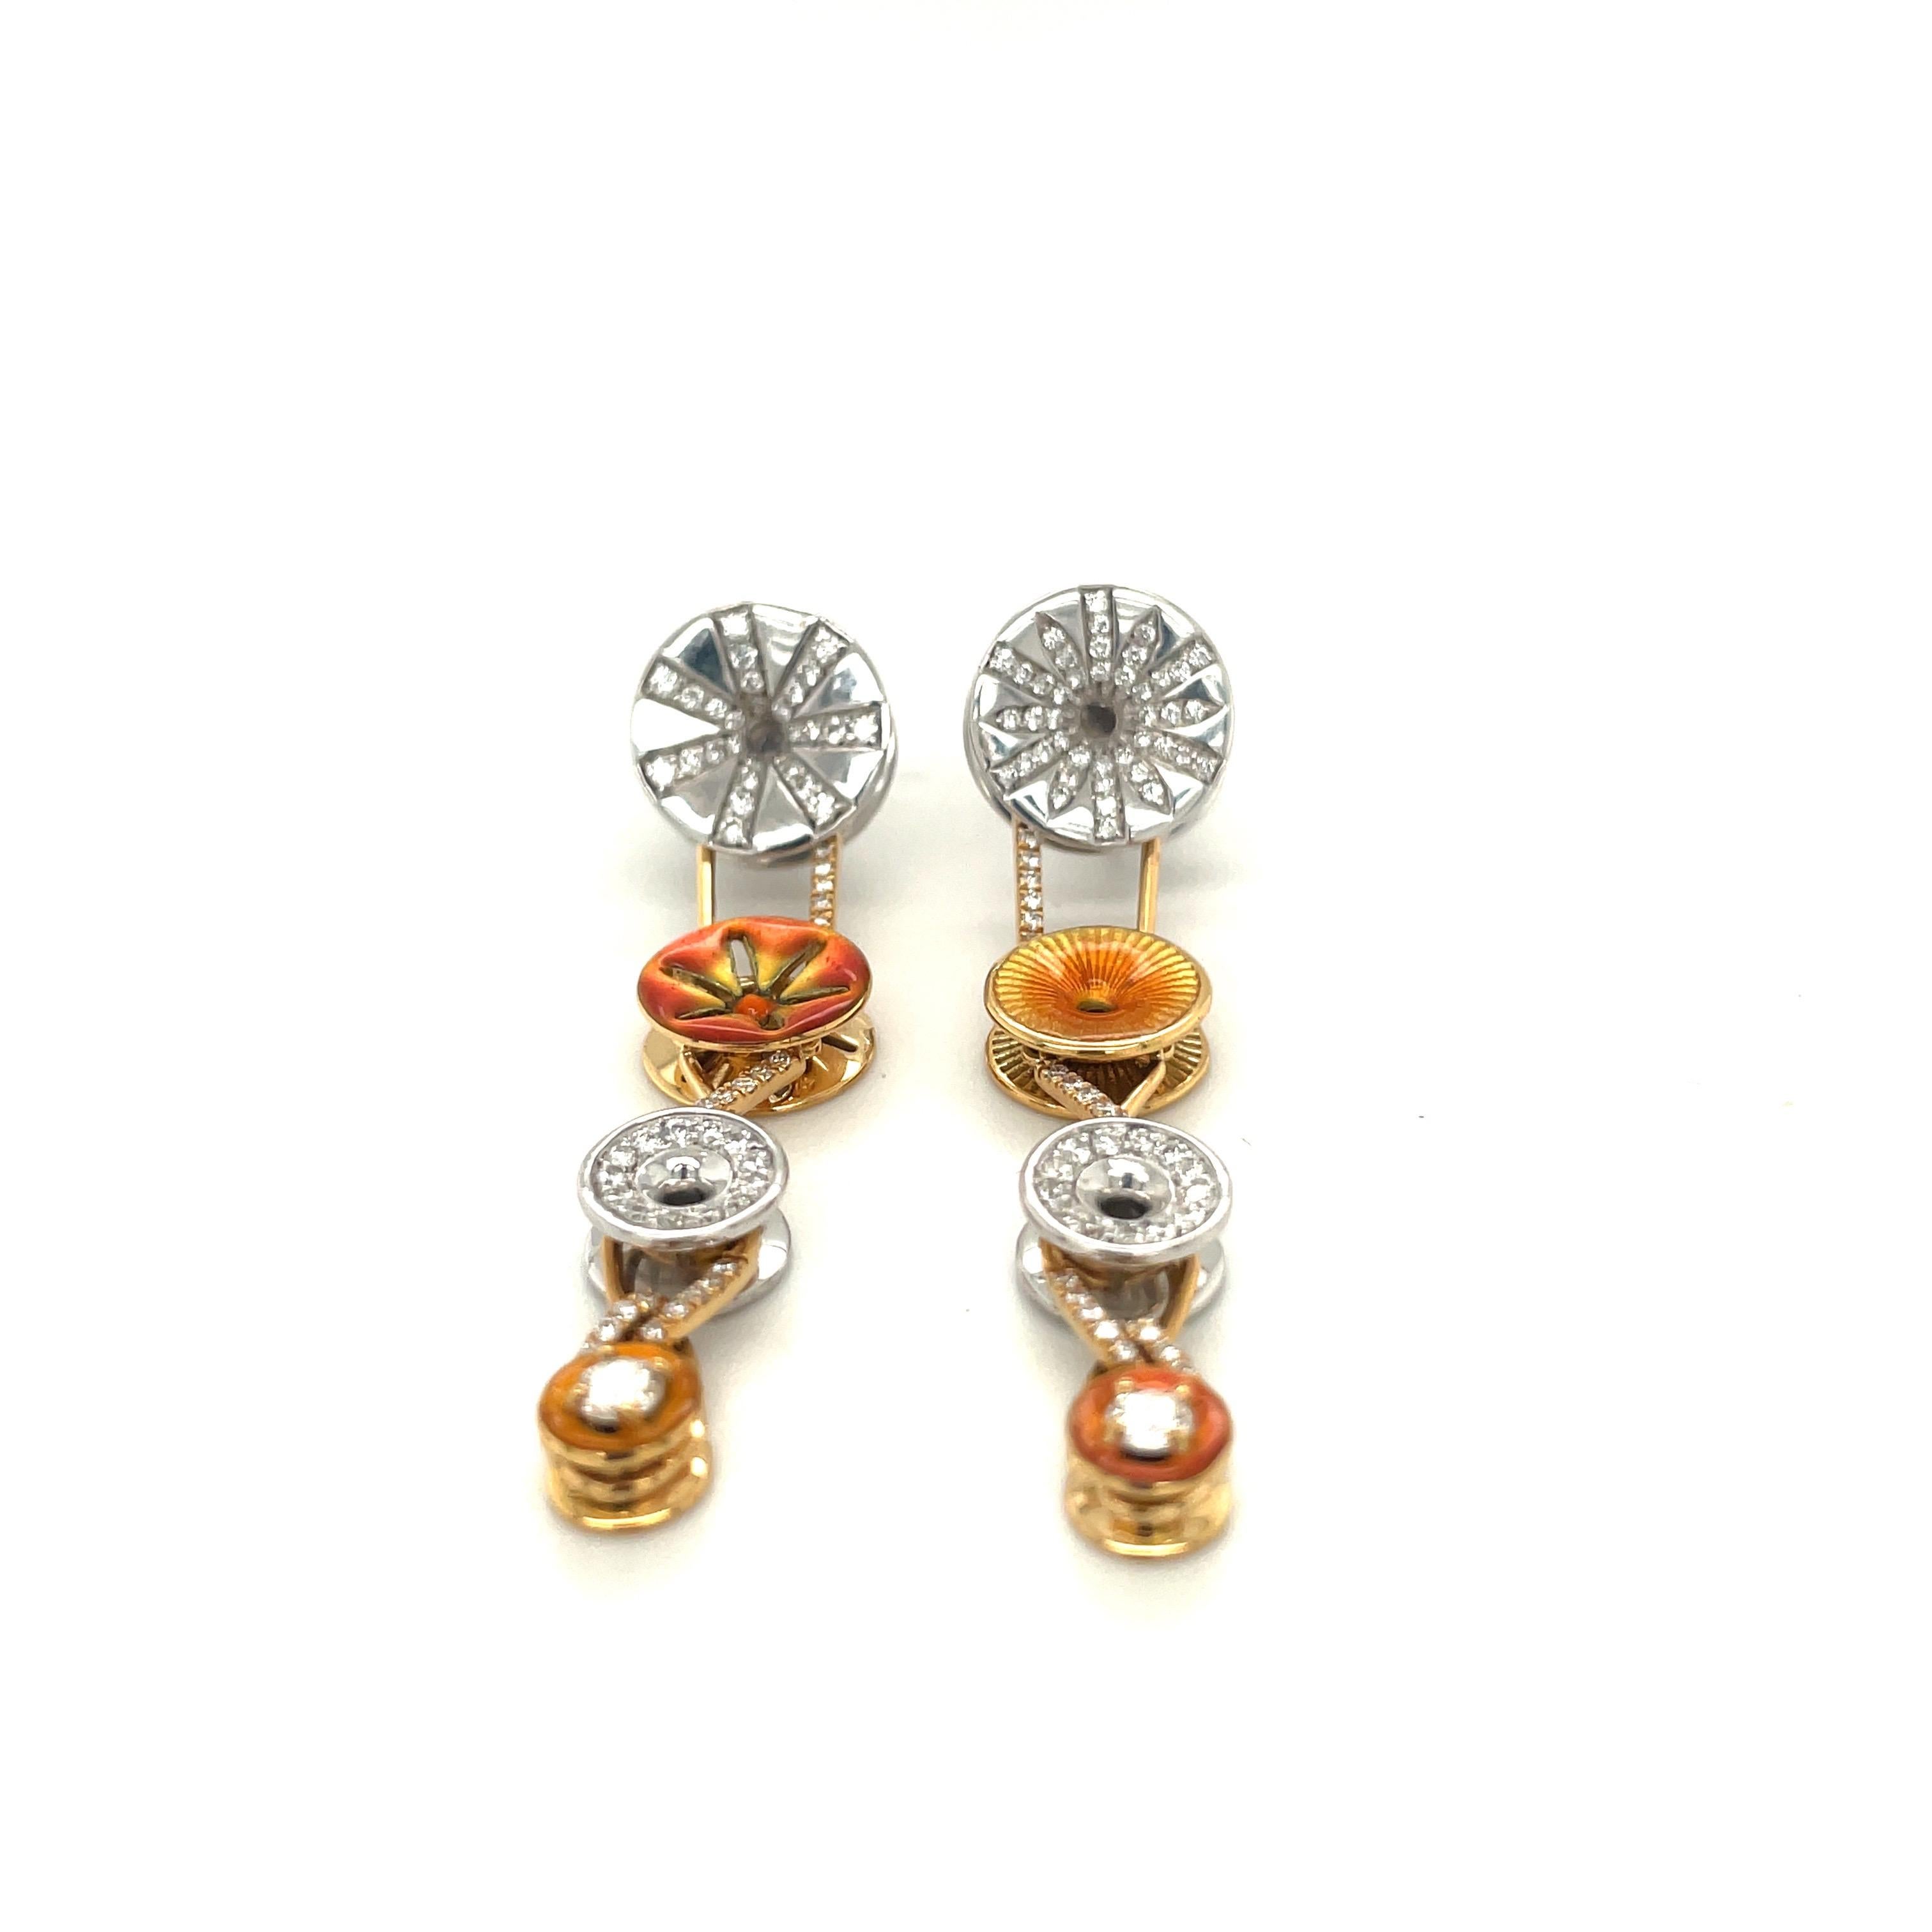 Art Nouveau Bagues Masriera 18KT Yellow & White Gold 0.93Ct Diamond and Enamel Earrings